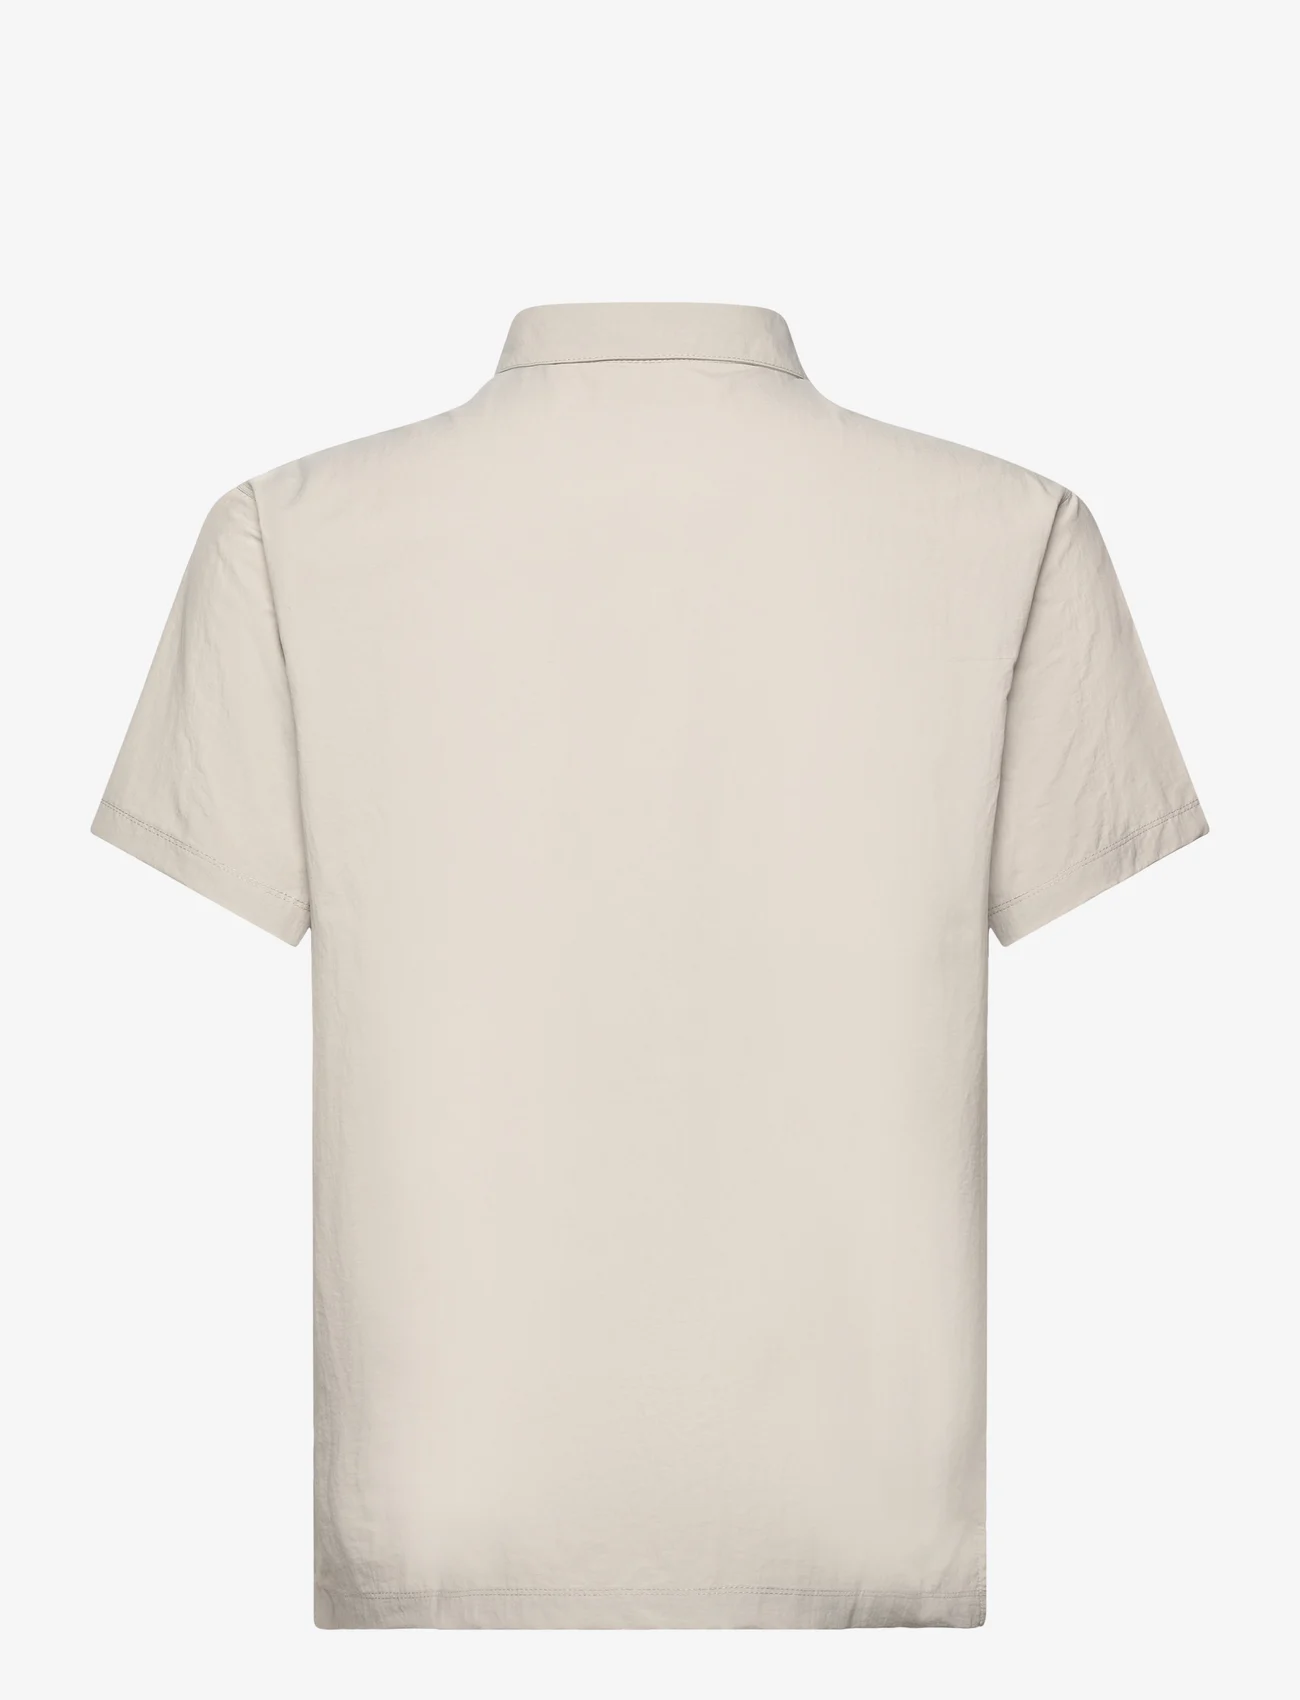 Columbia Sportswear - Mountaindale Outdoor SS Shirt - basic shirts - flint grey - 1